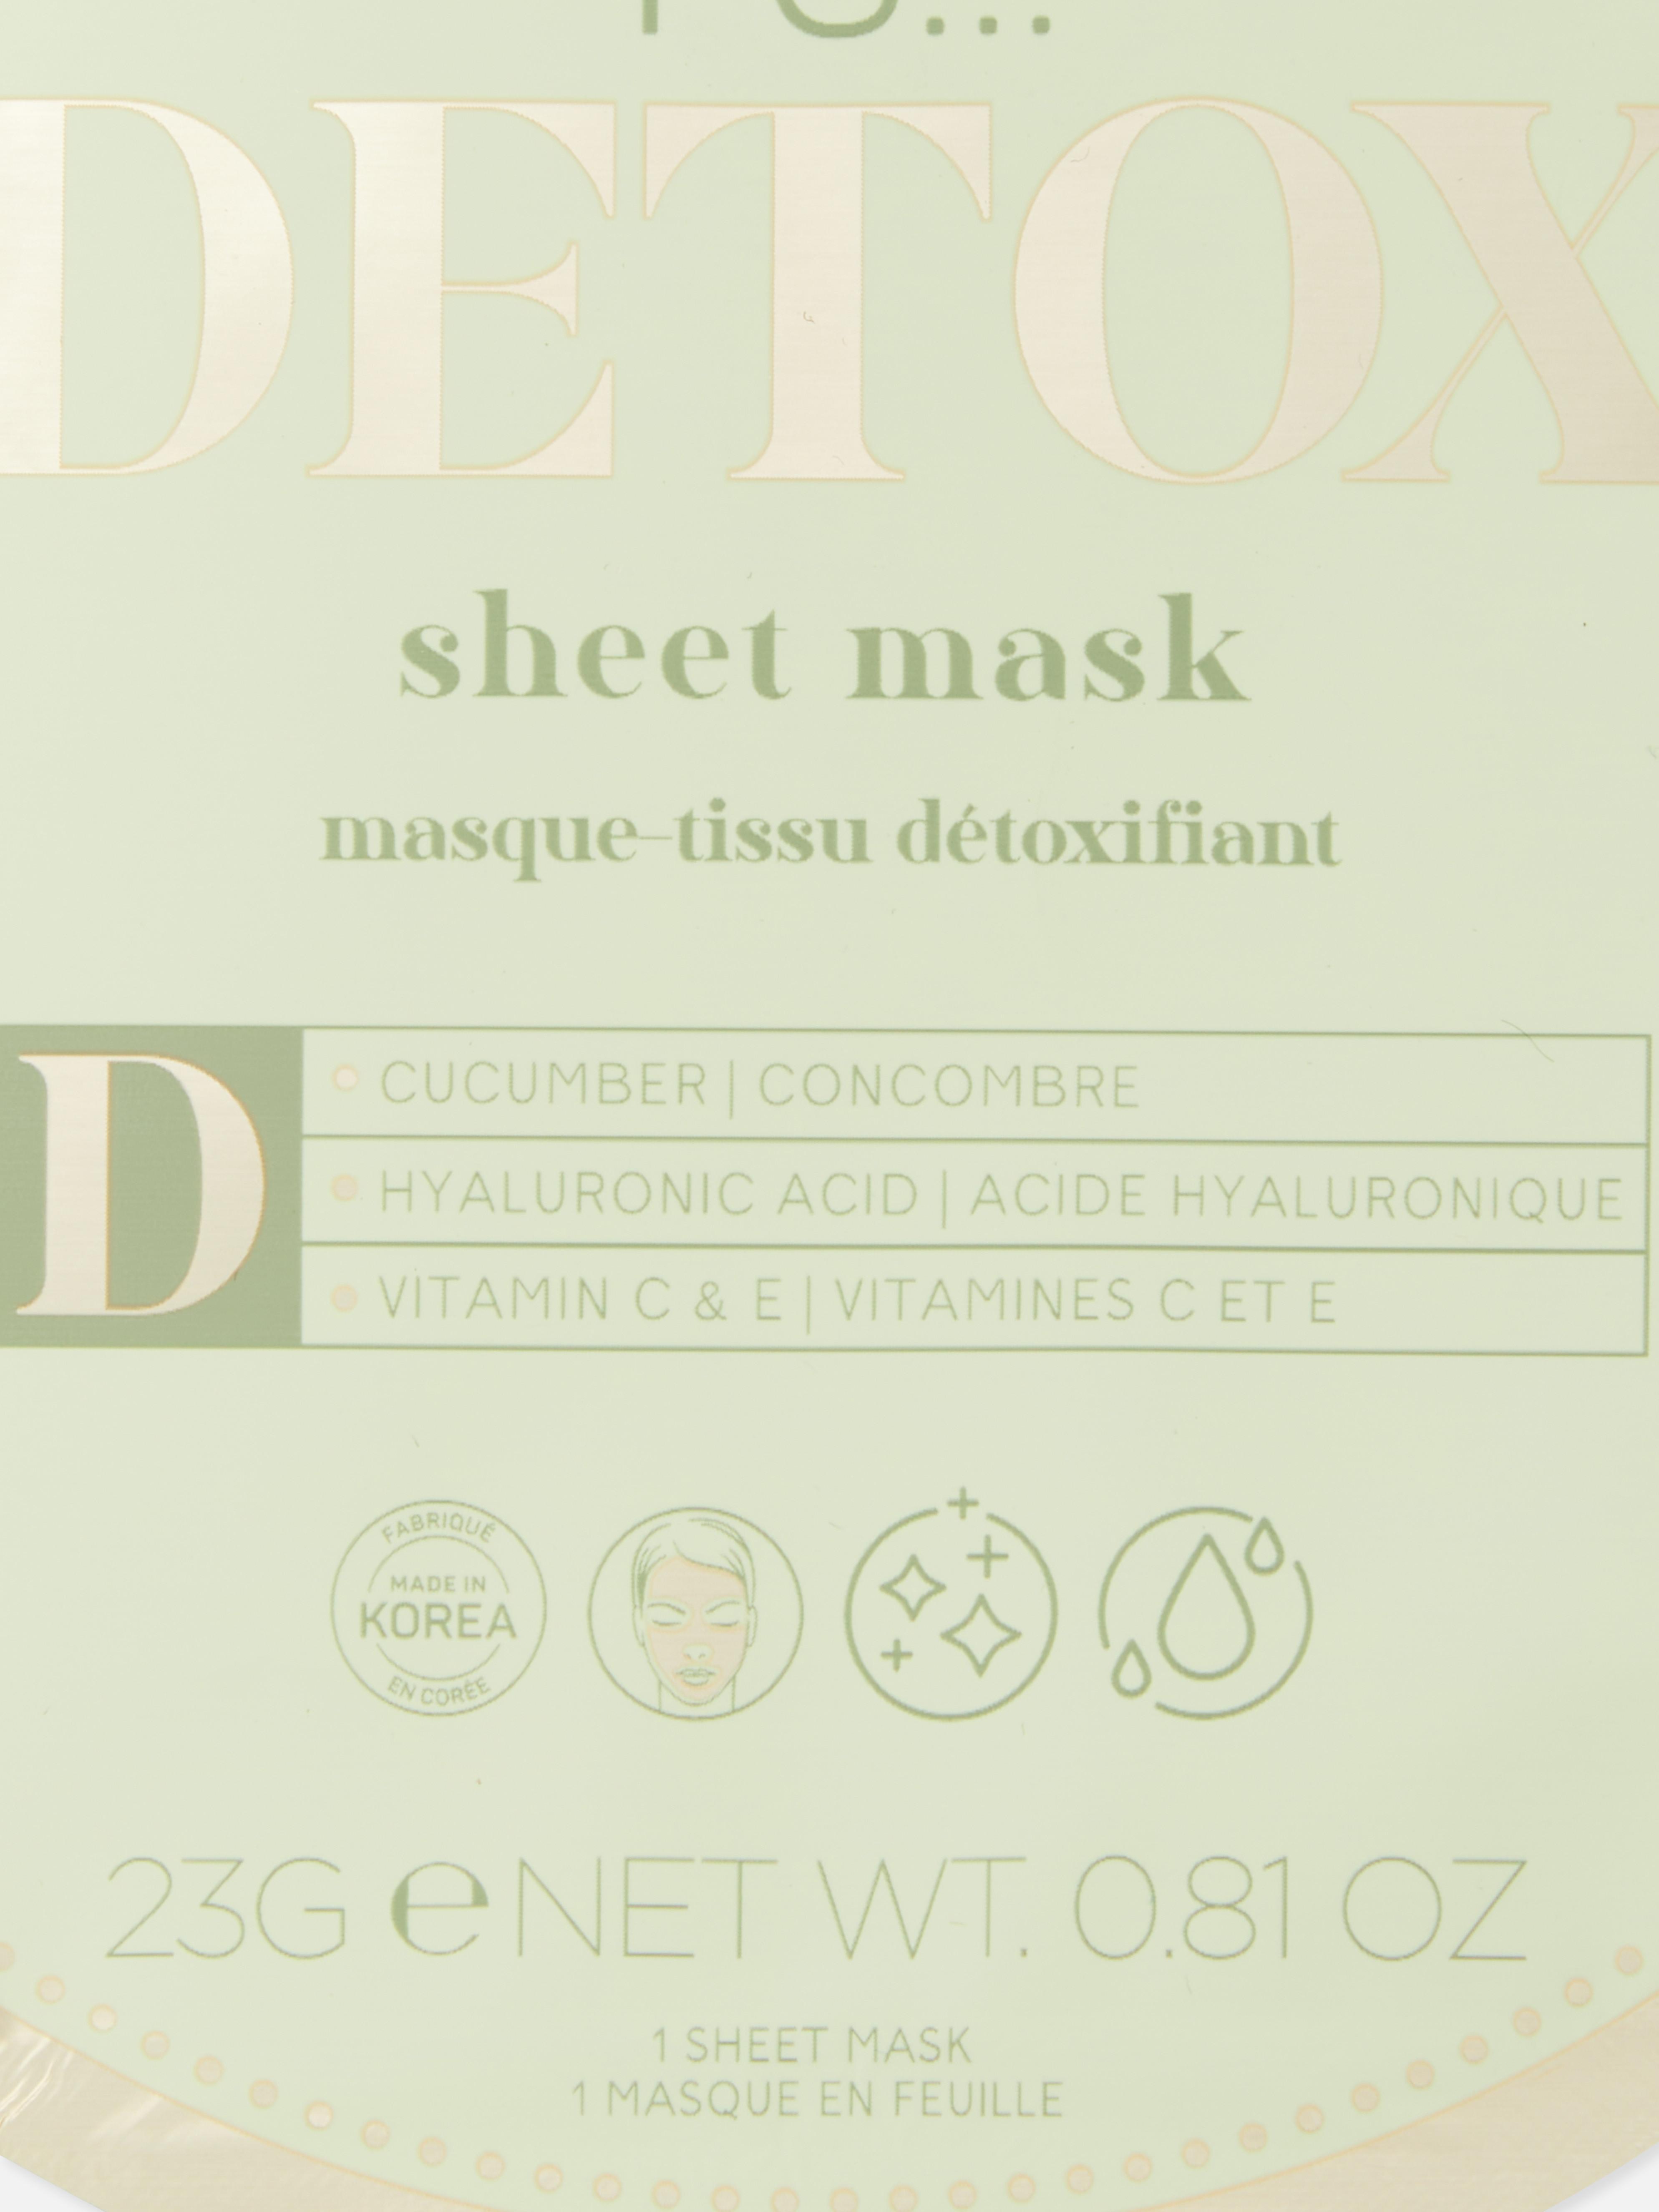 PS… Detox Sheet Mask